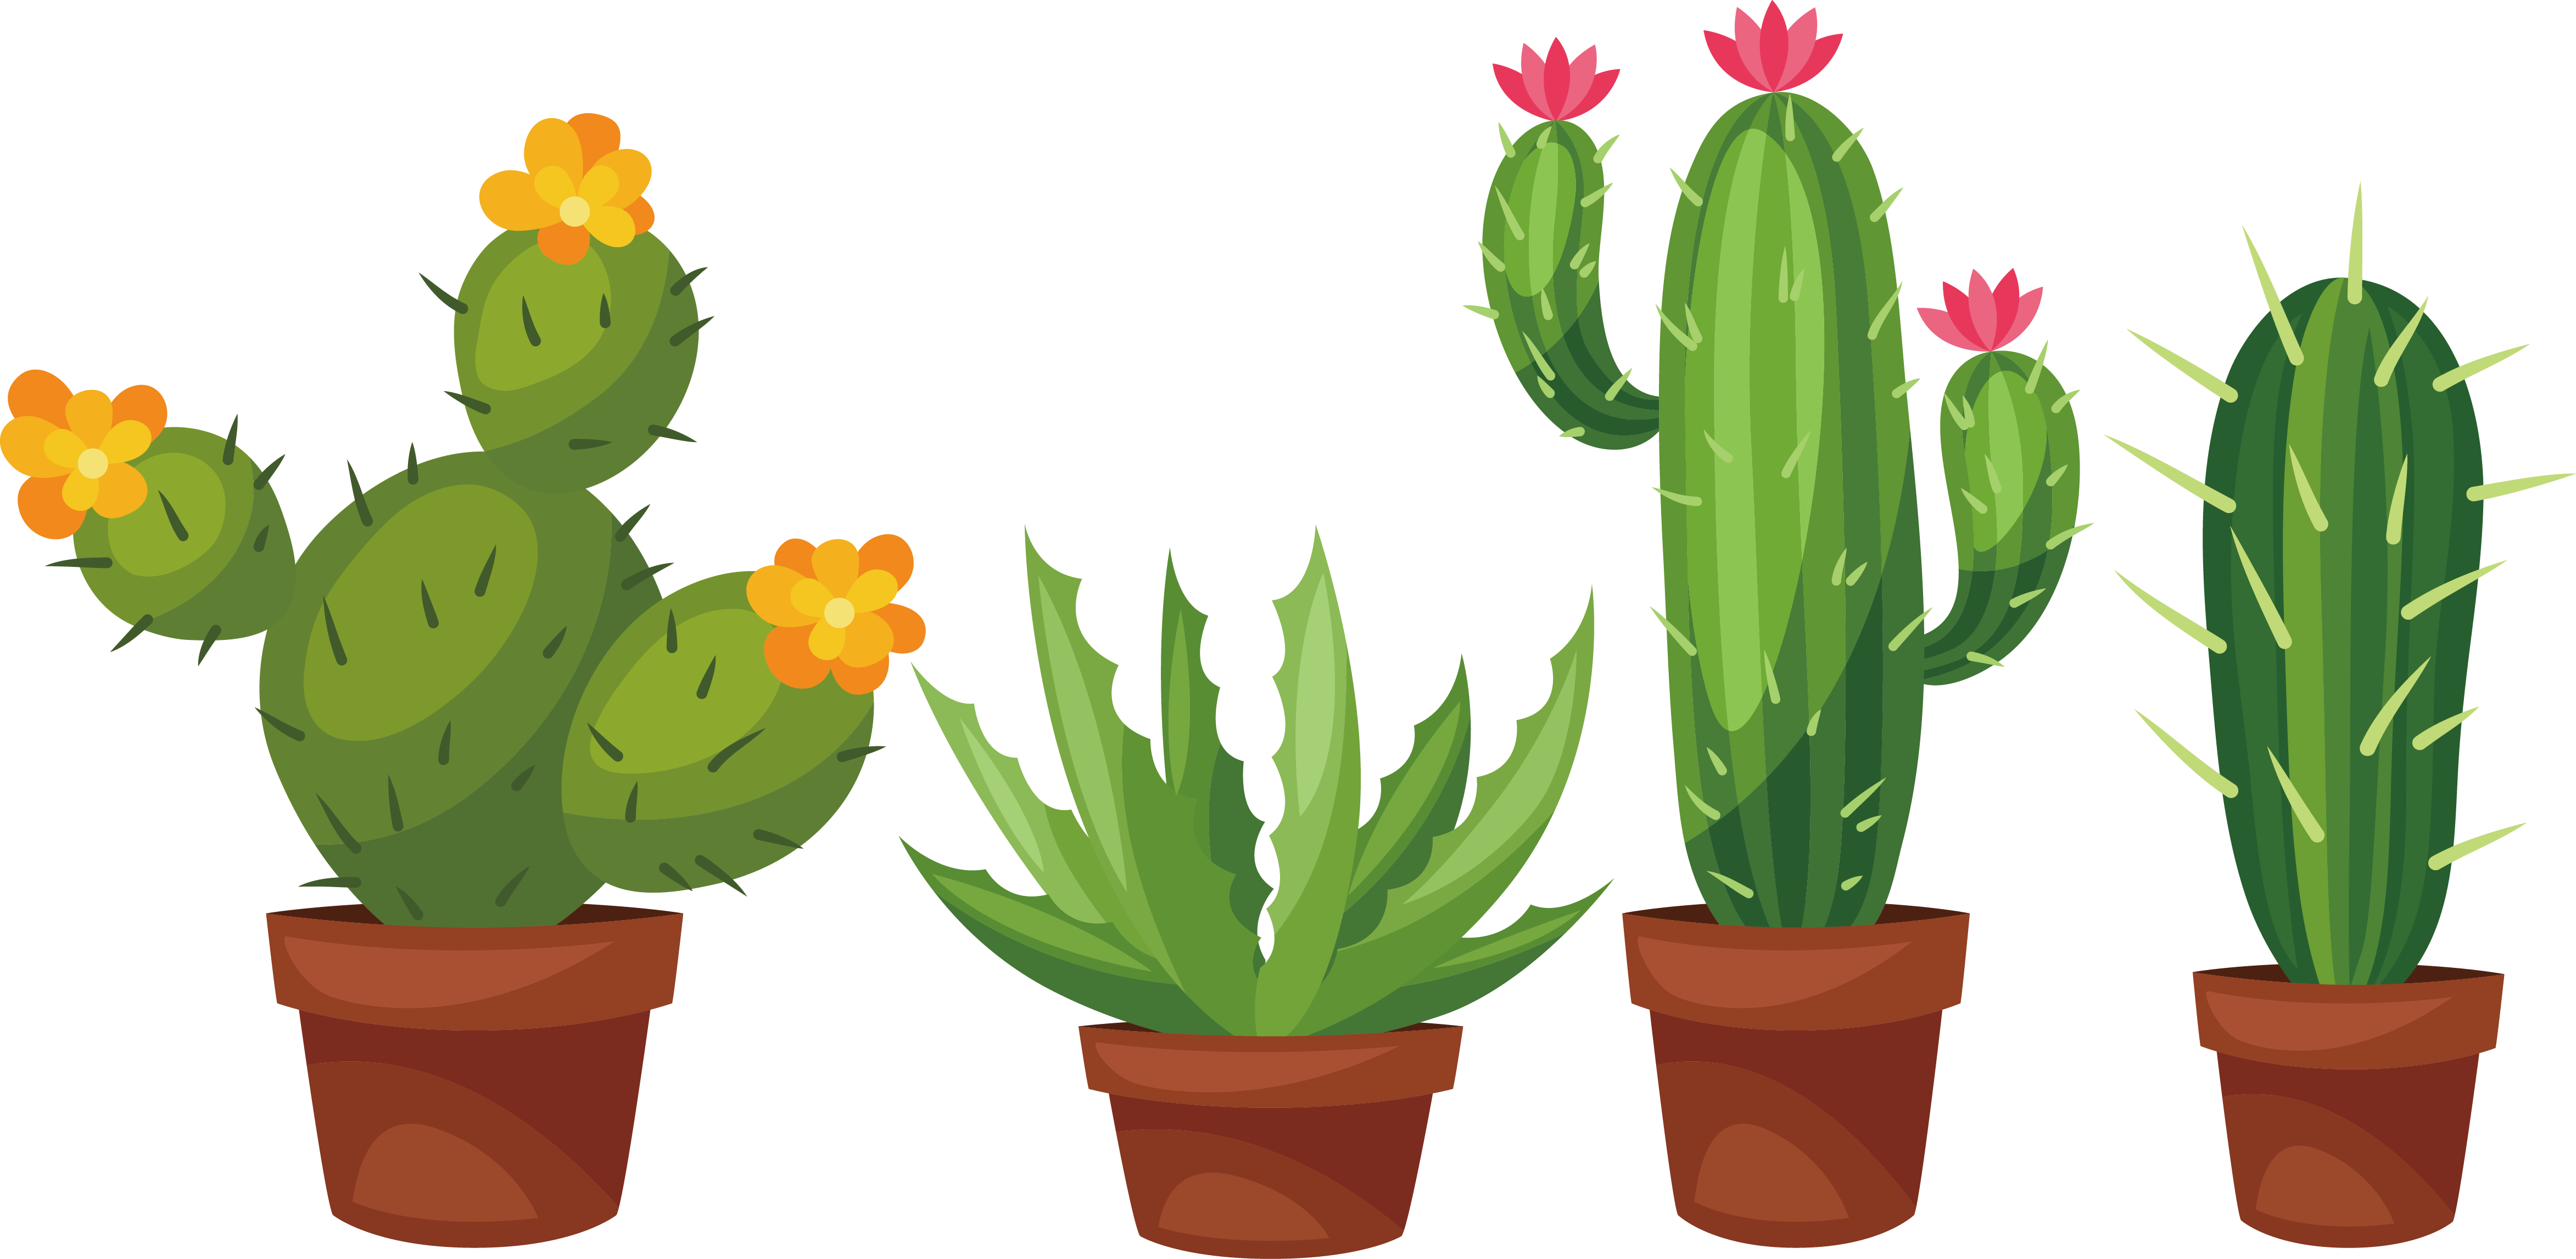 cactus illustration download free